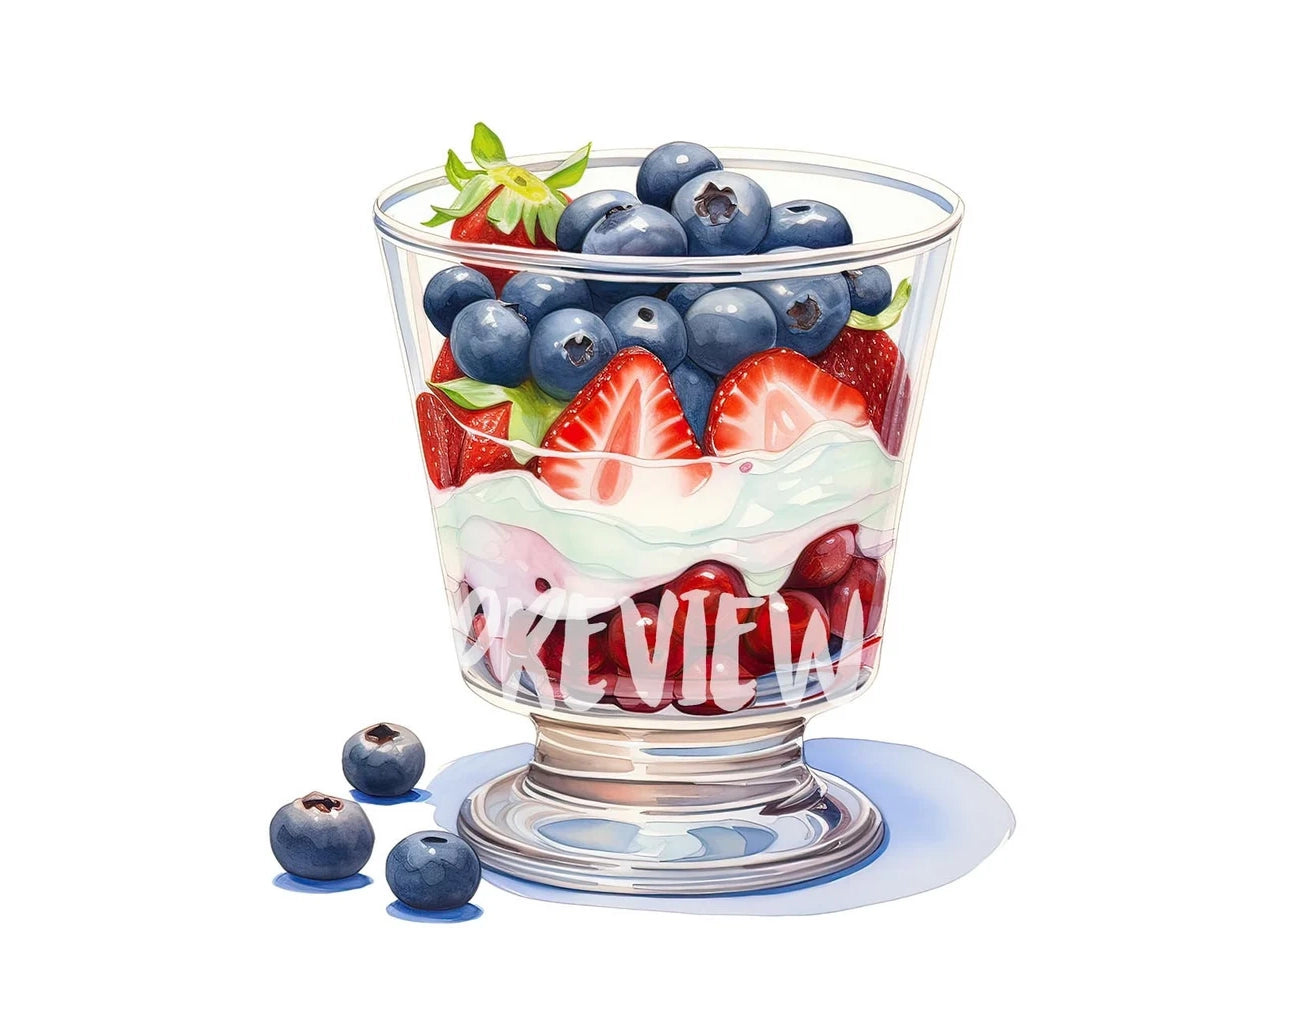 Watercolor Fruit Trifle Clipart